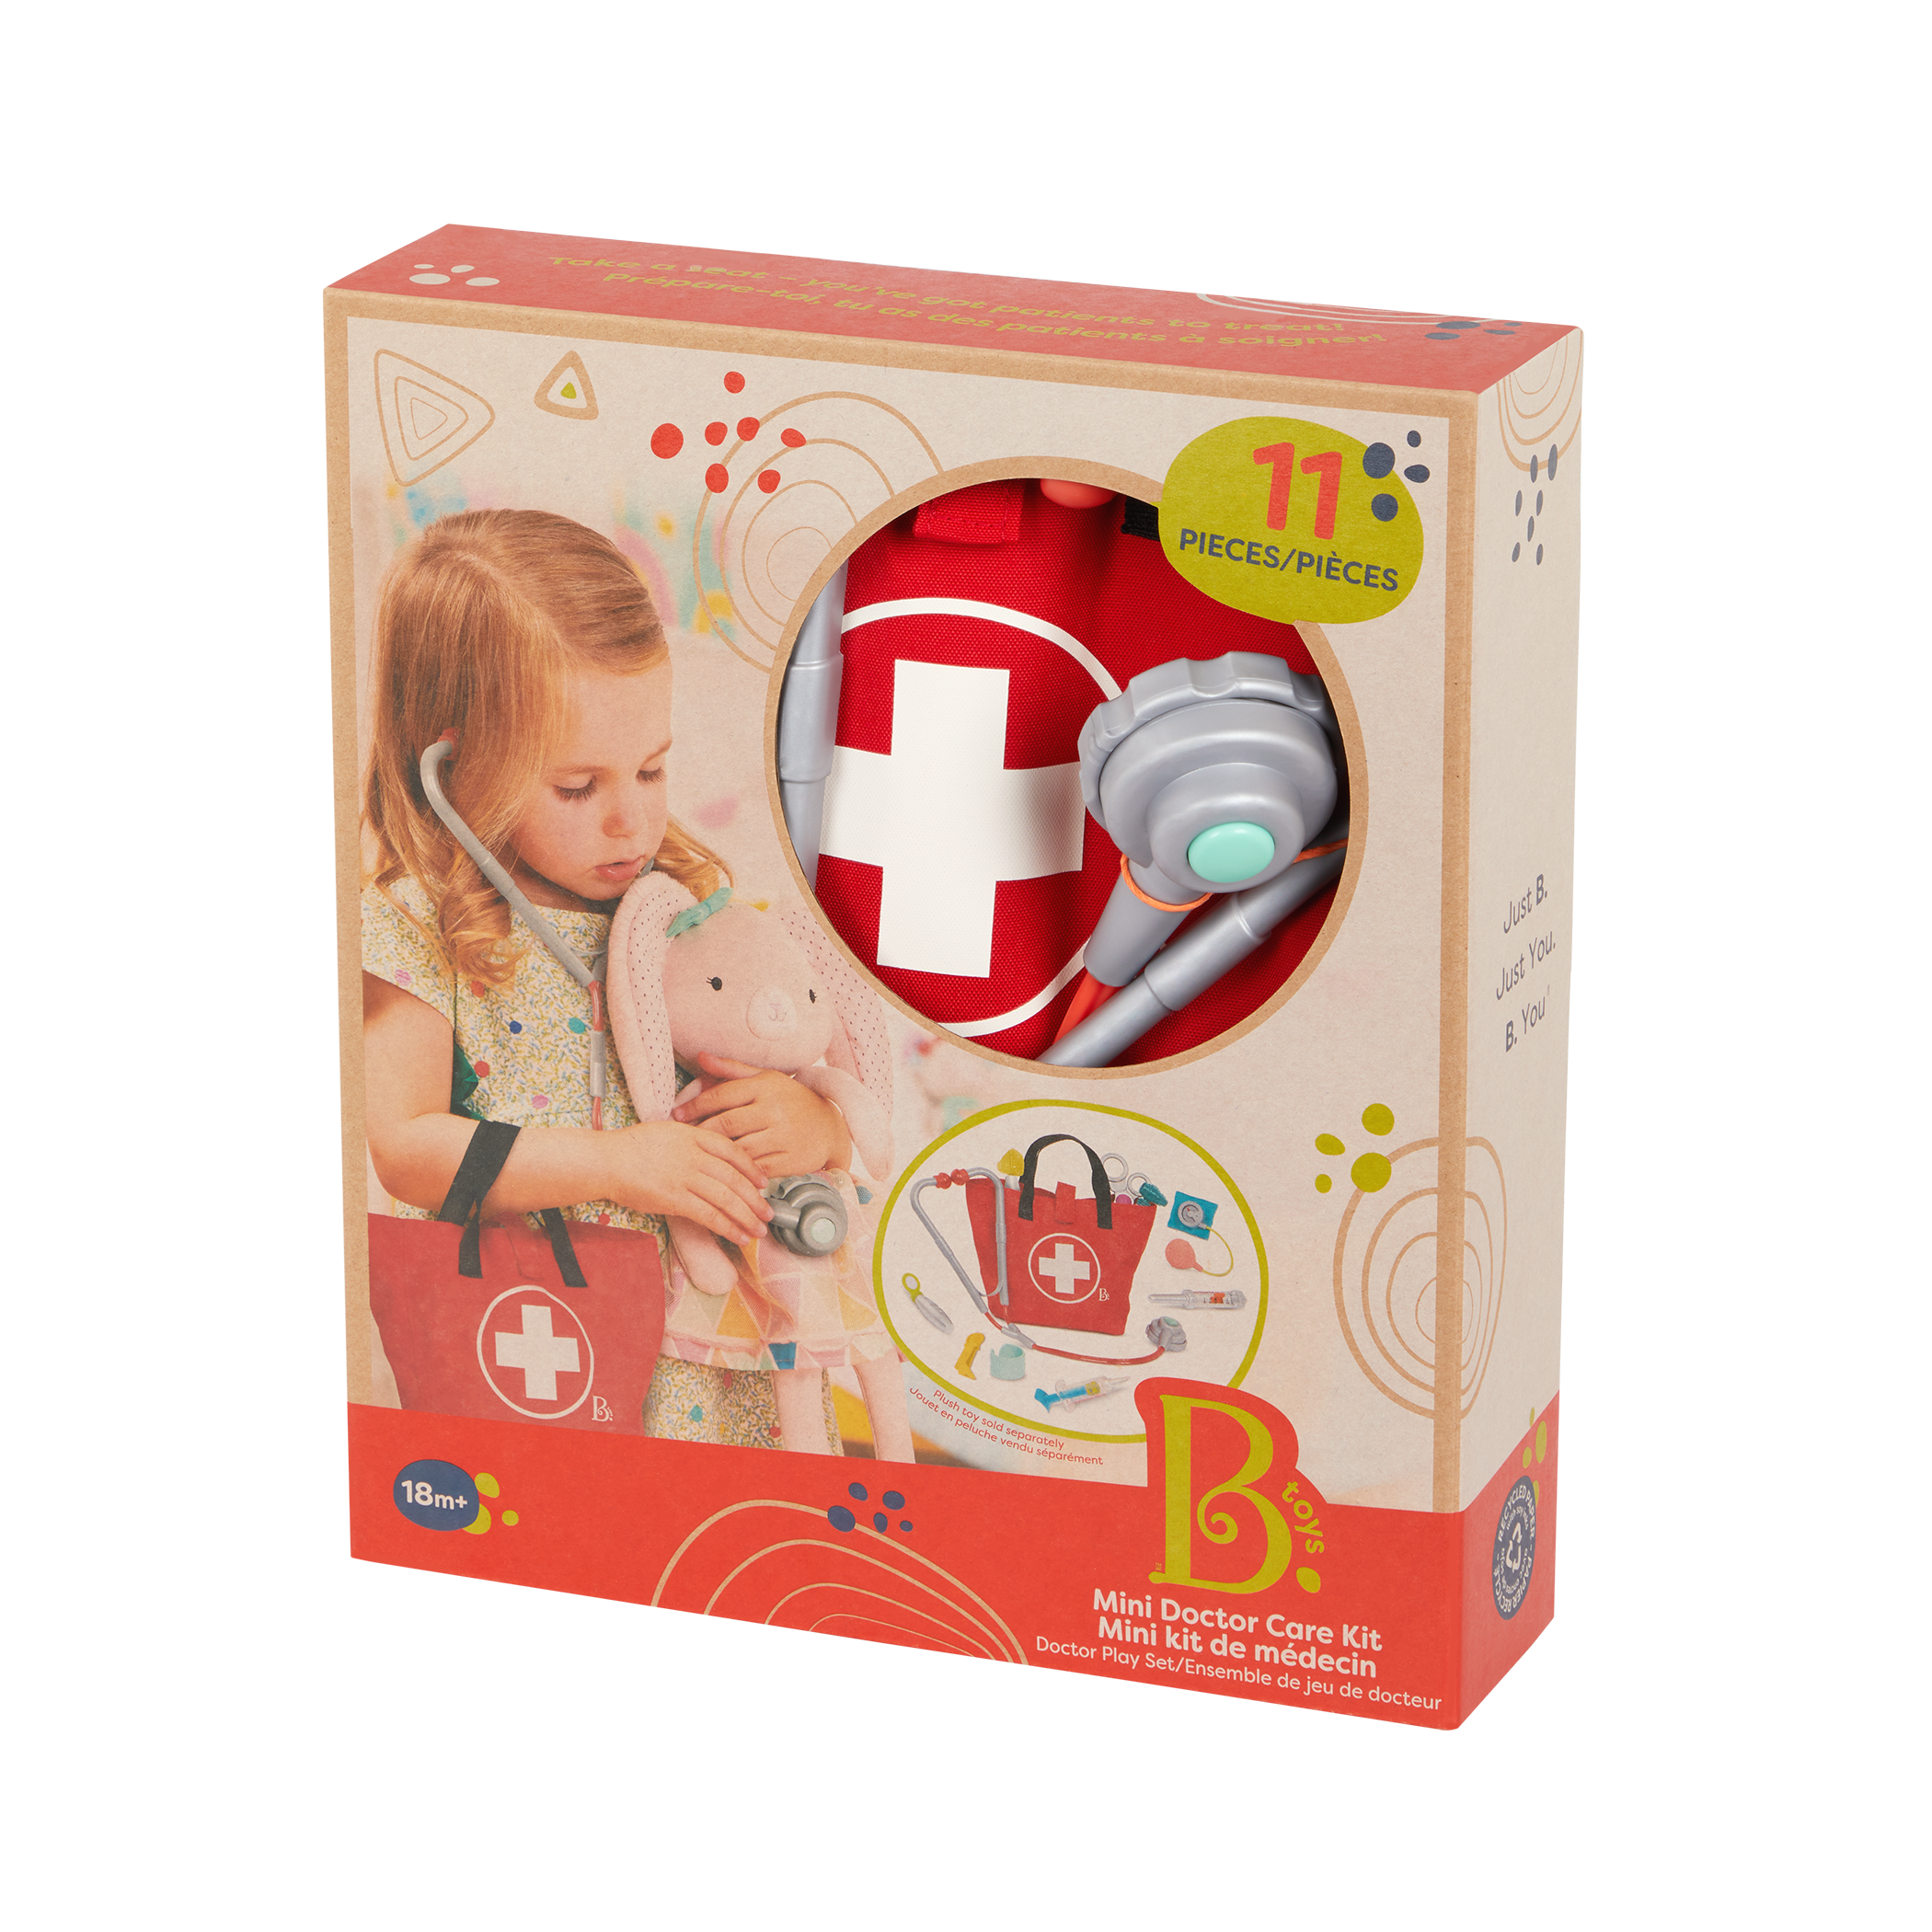 Mini Doctor Care Kit, Doctor Play Set